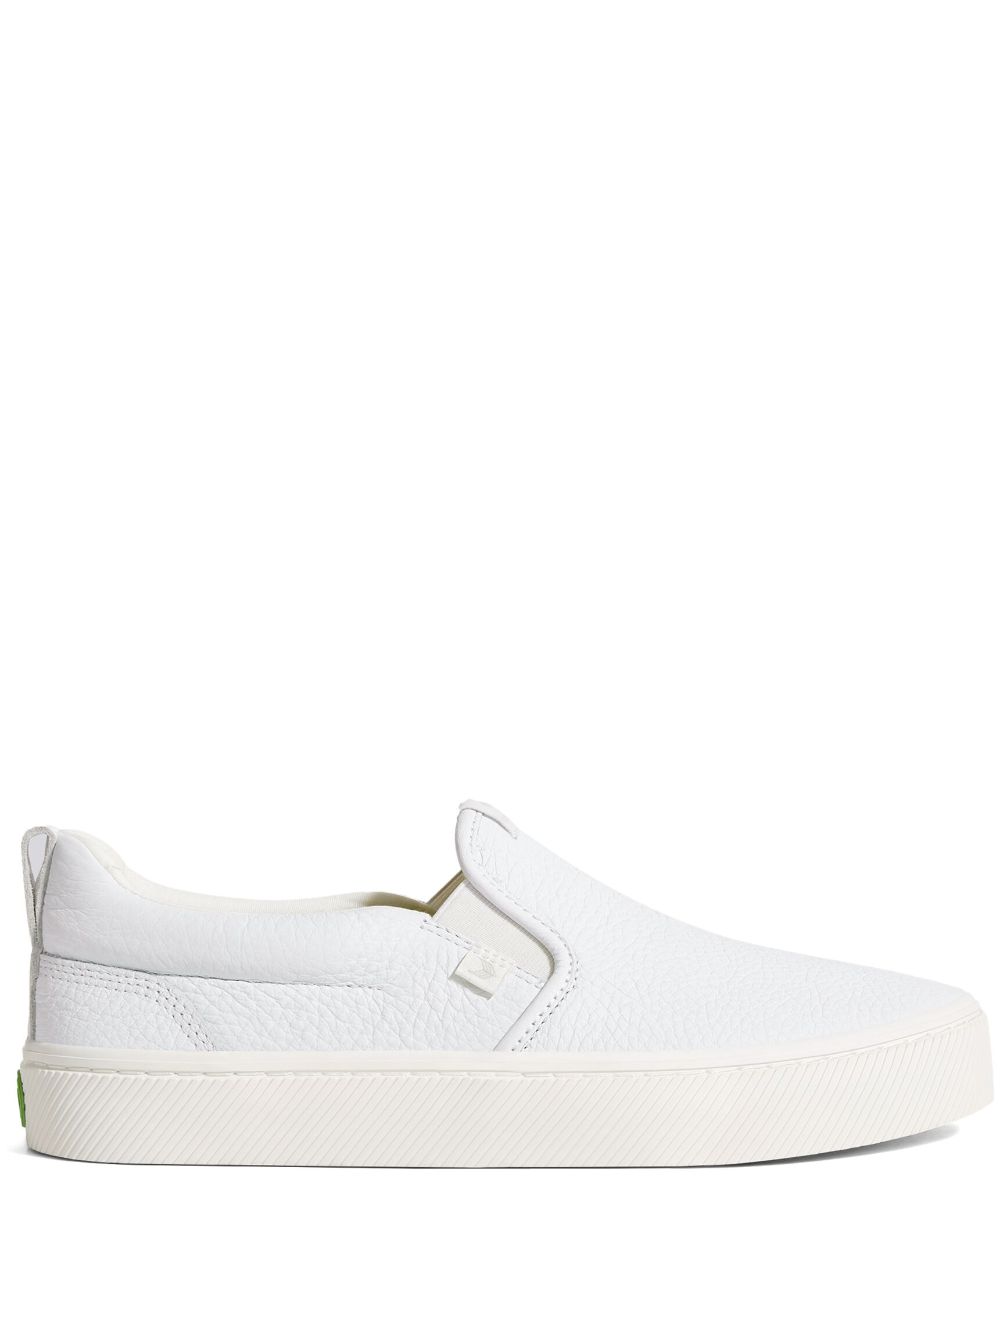 Cariuma Leather Slip-on Sneakers In White